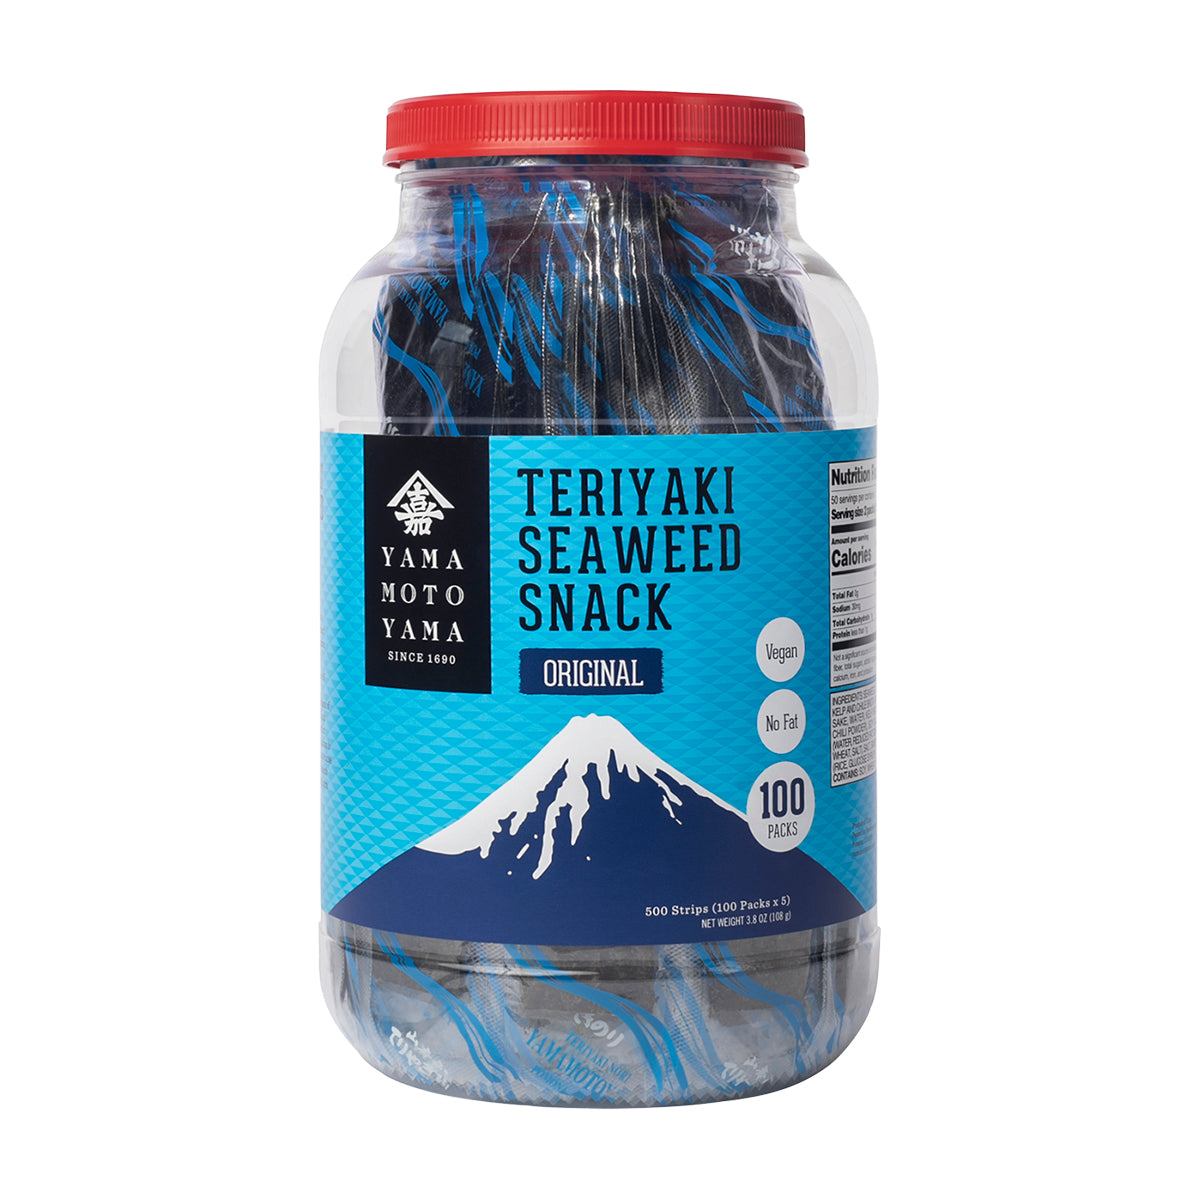 Teriyaki Seaweed Snack Original Large Jar